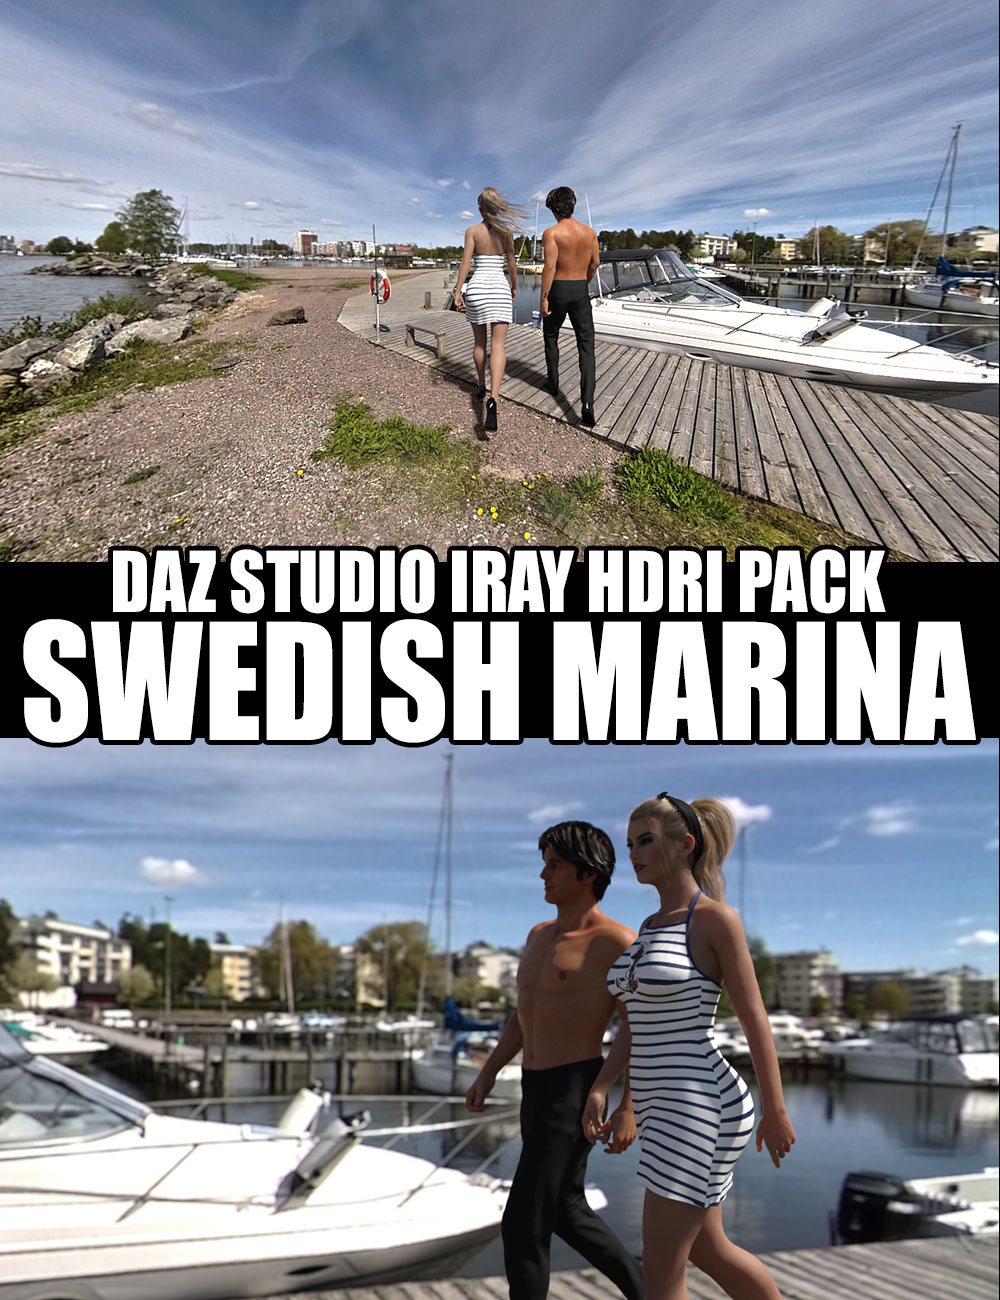 Swedish Marina - DAZ Studio Iray HDRI Pack by: Dreamlight, 3D Models by Daz 3D